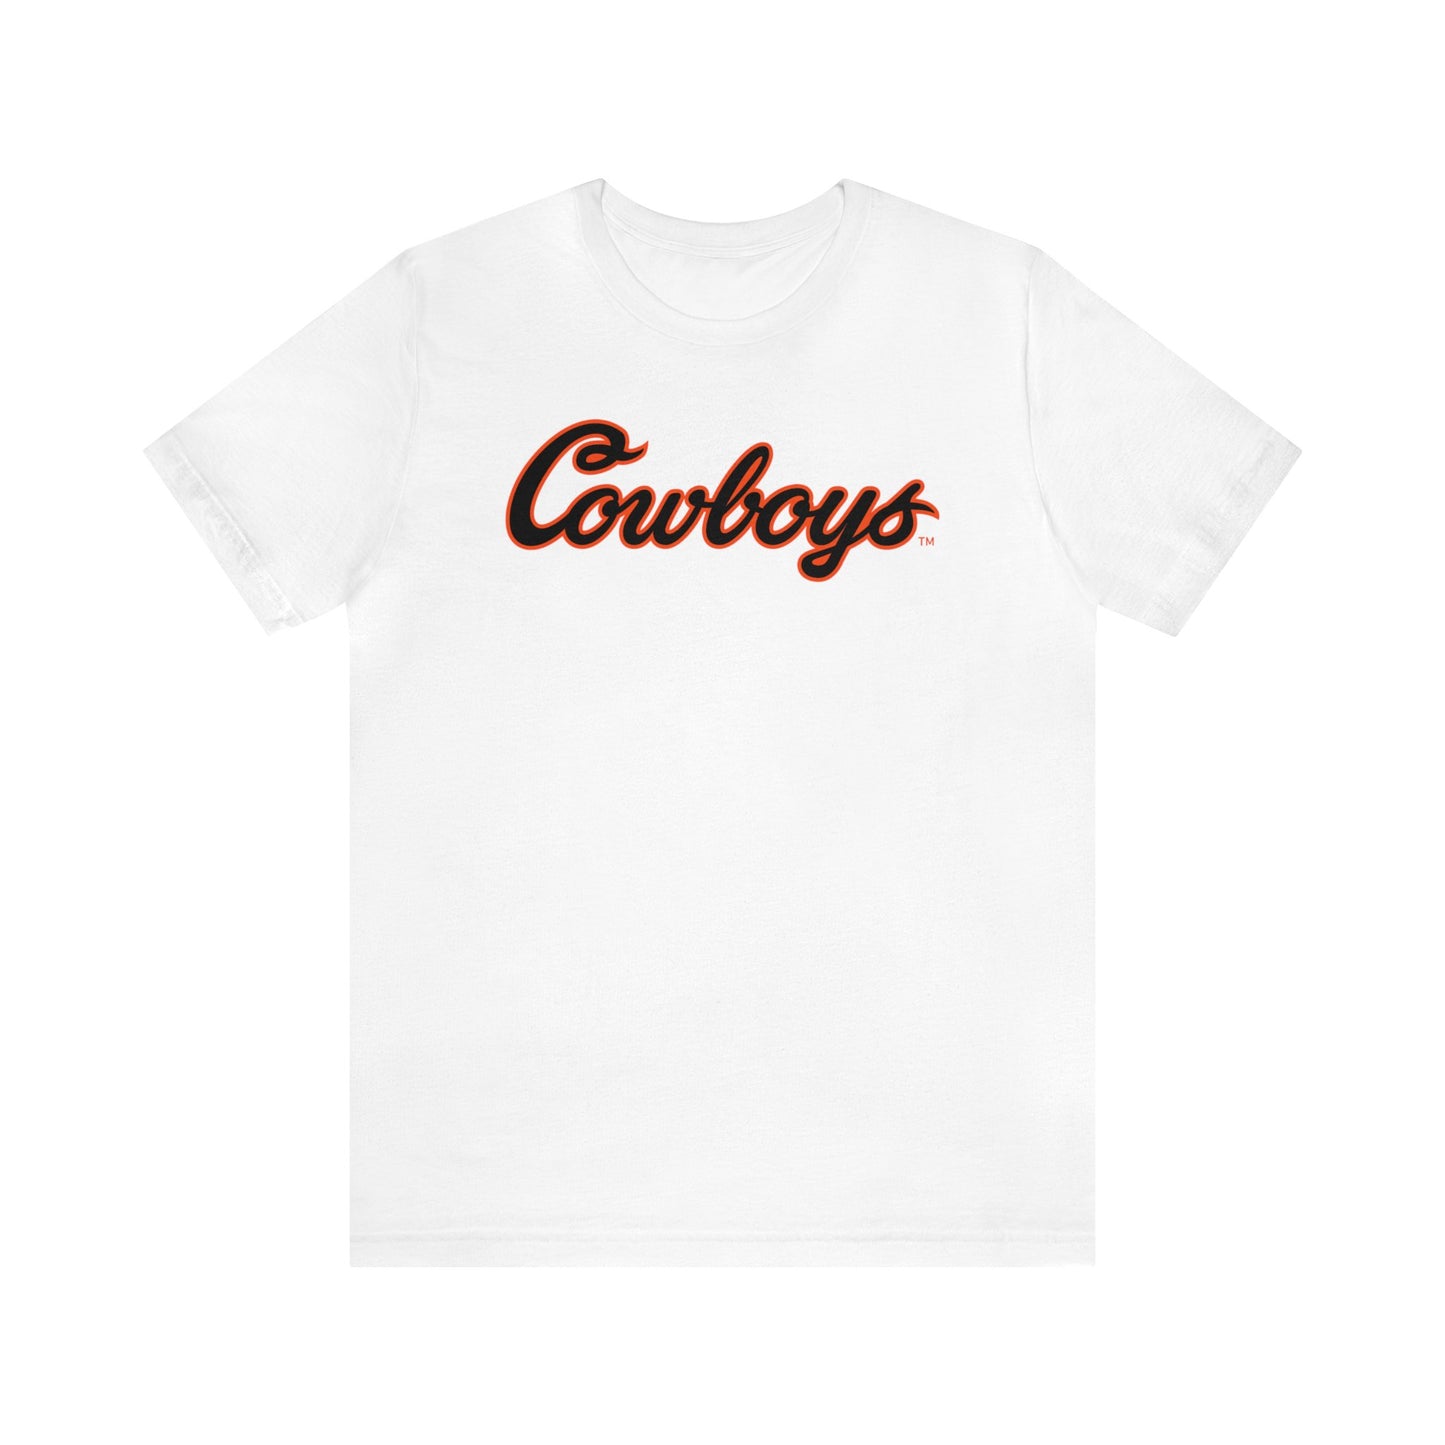 Brennan Presley #80 Cursive Cowboys T-Shirt